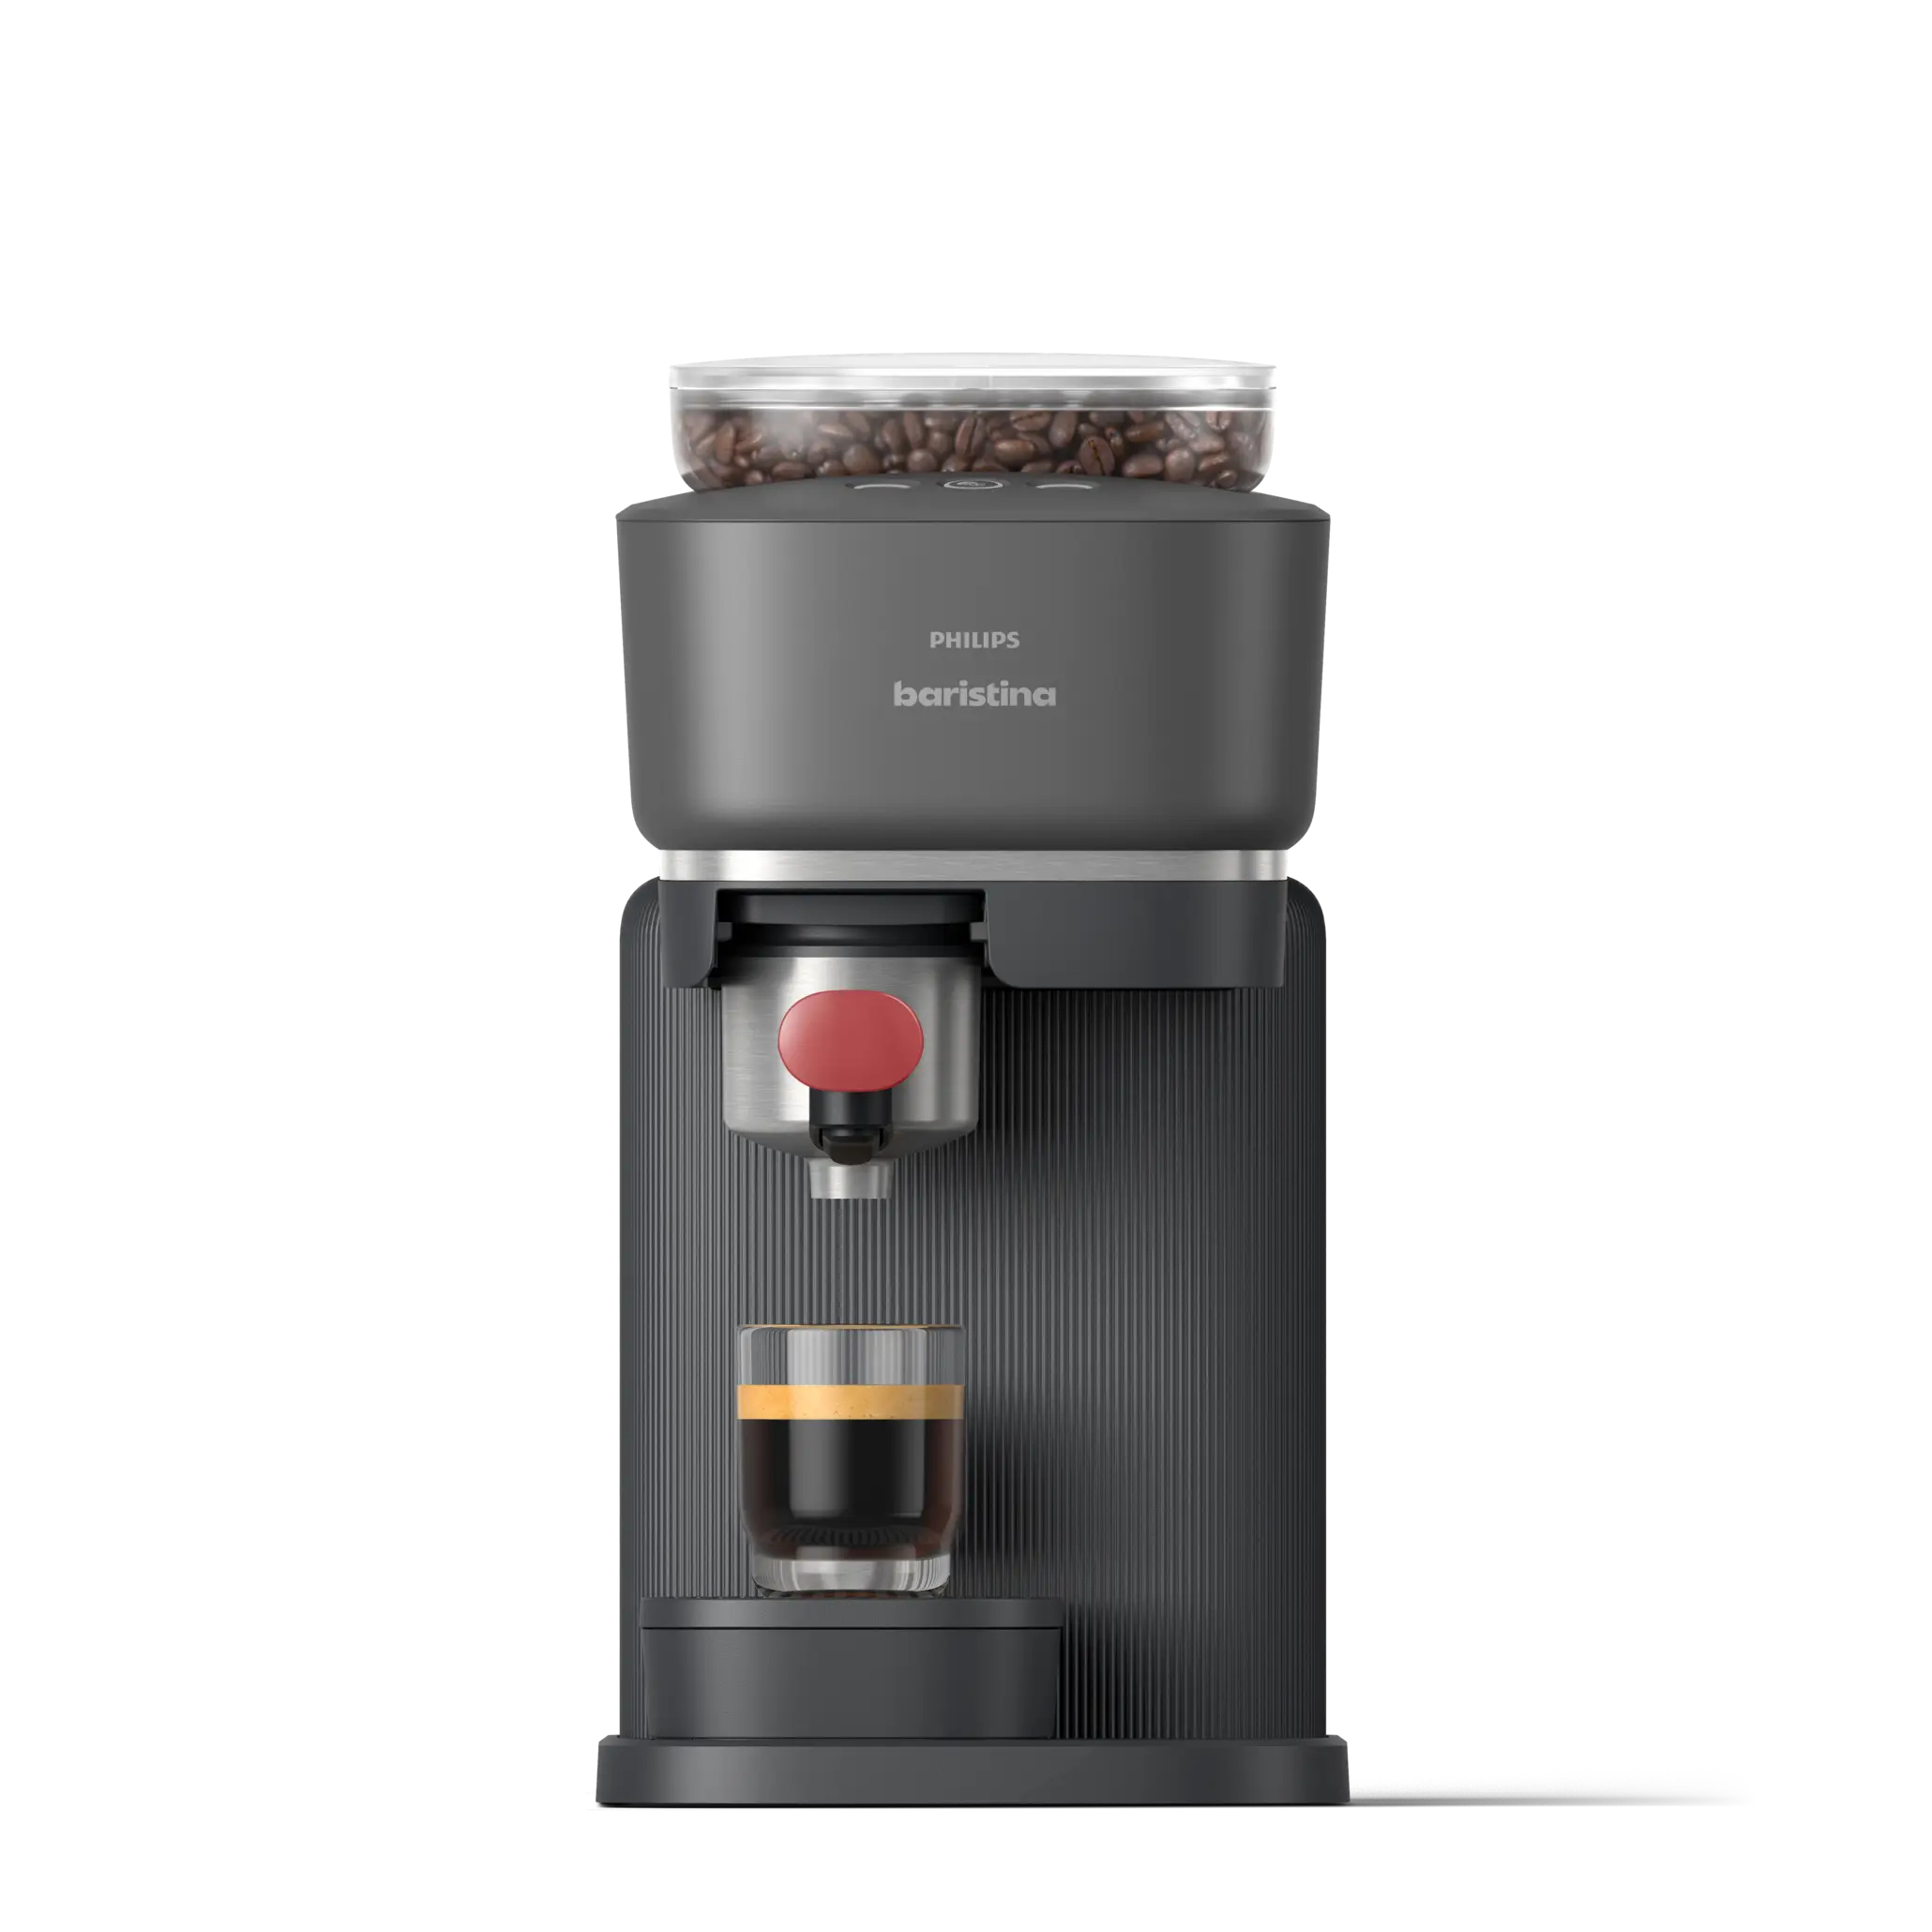 Philips BAR301/65 coffee maker